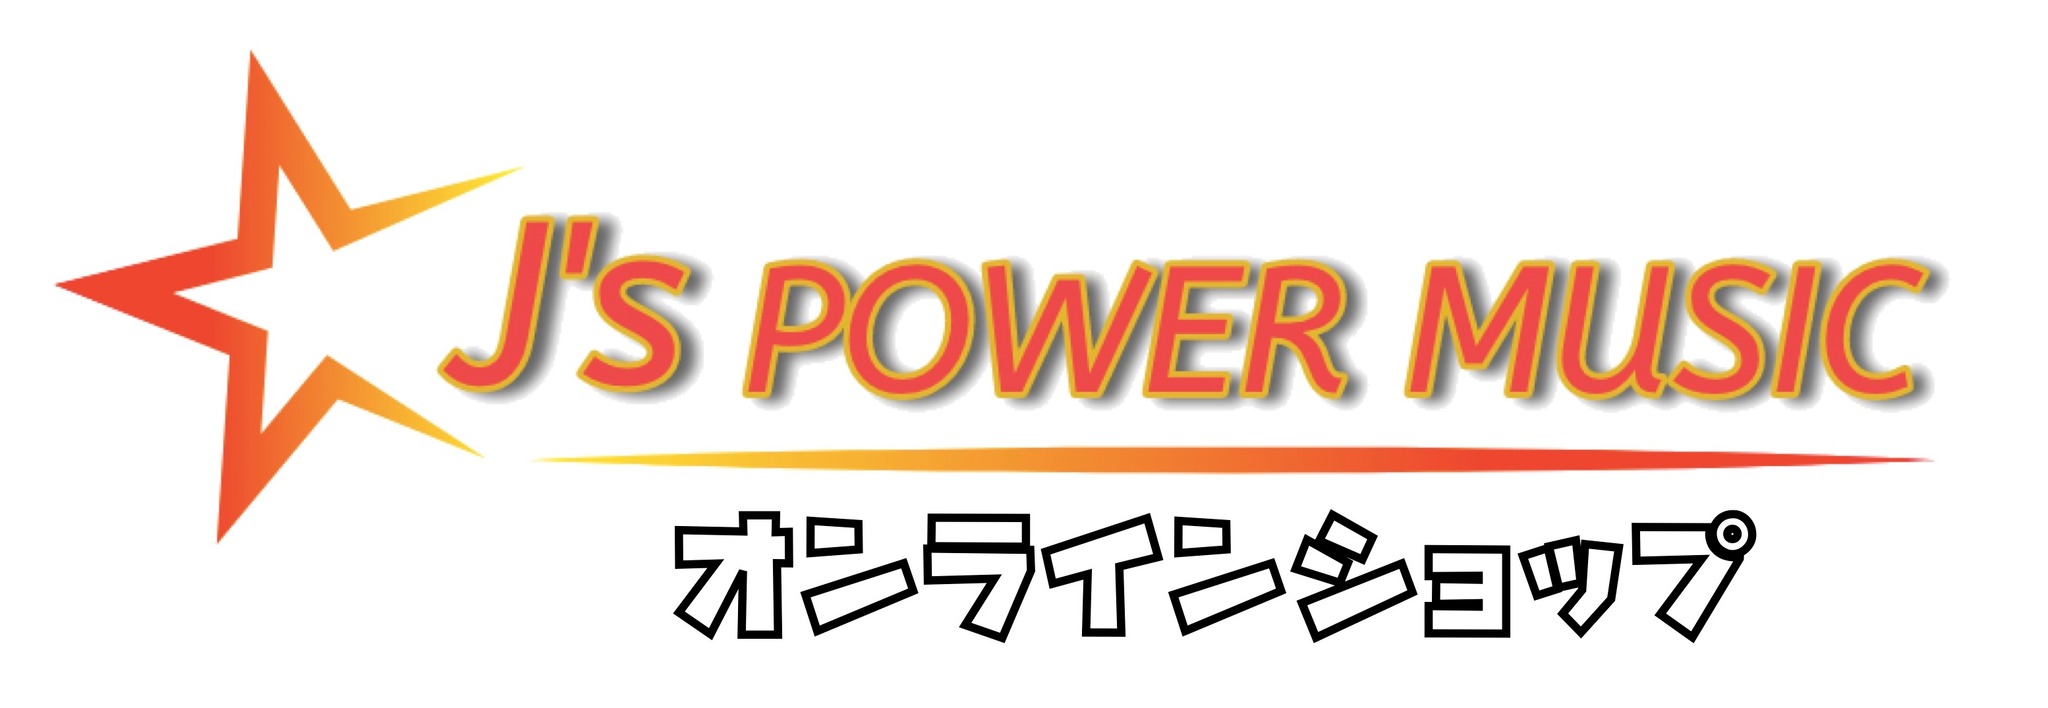 J’s POWER MUSIC オンラインショップ